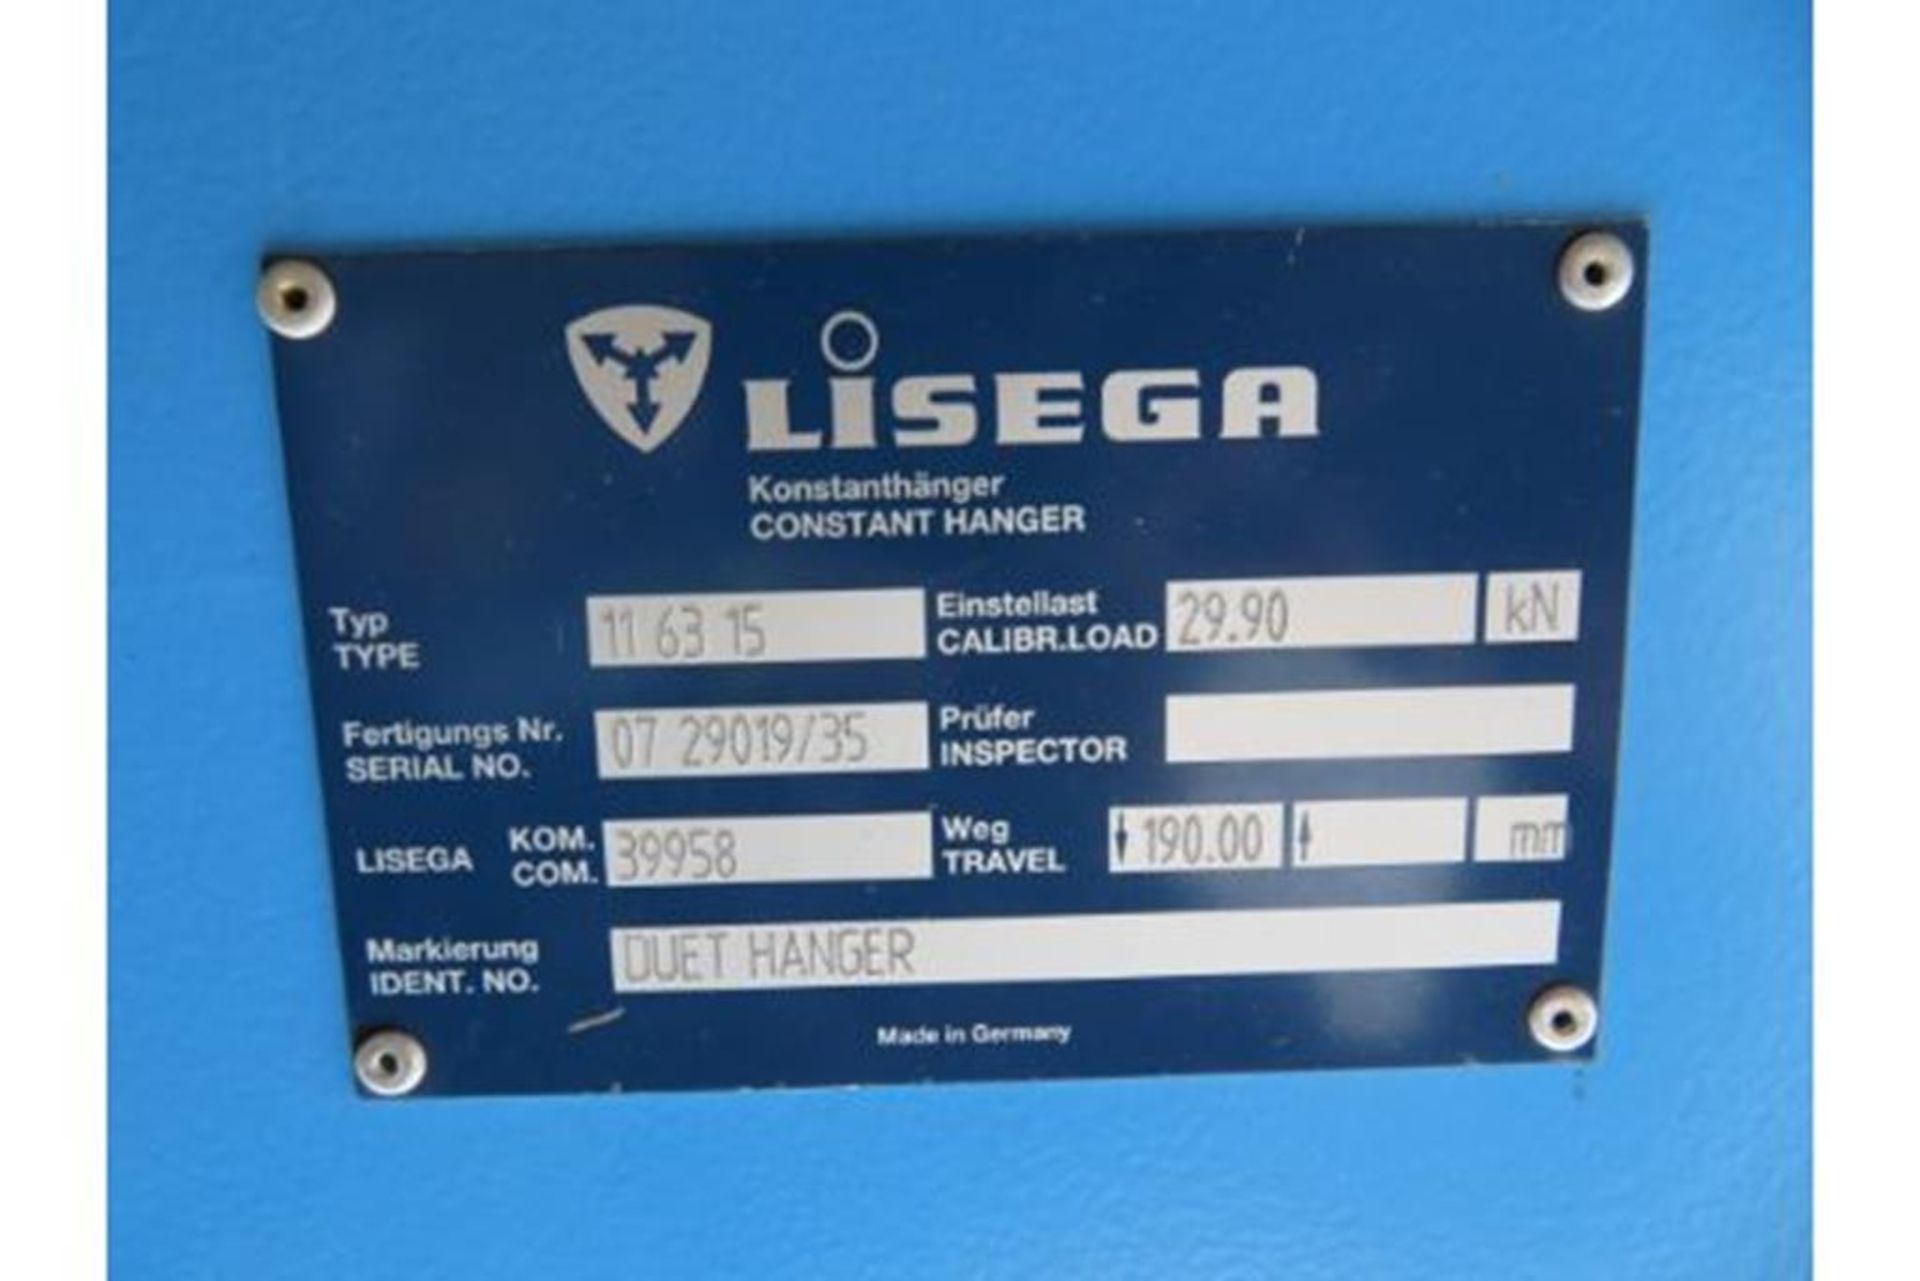 3 x Lisega constant hangers - Image 2 of 2